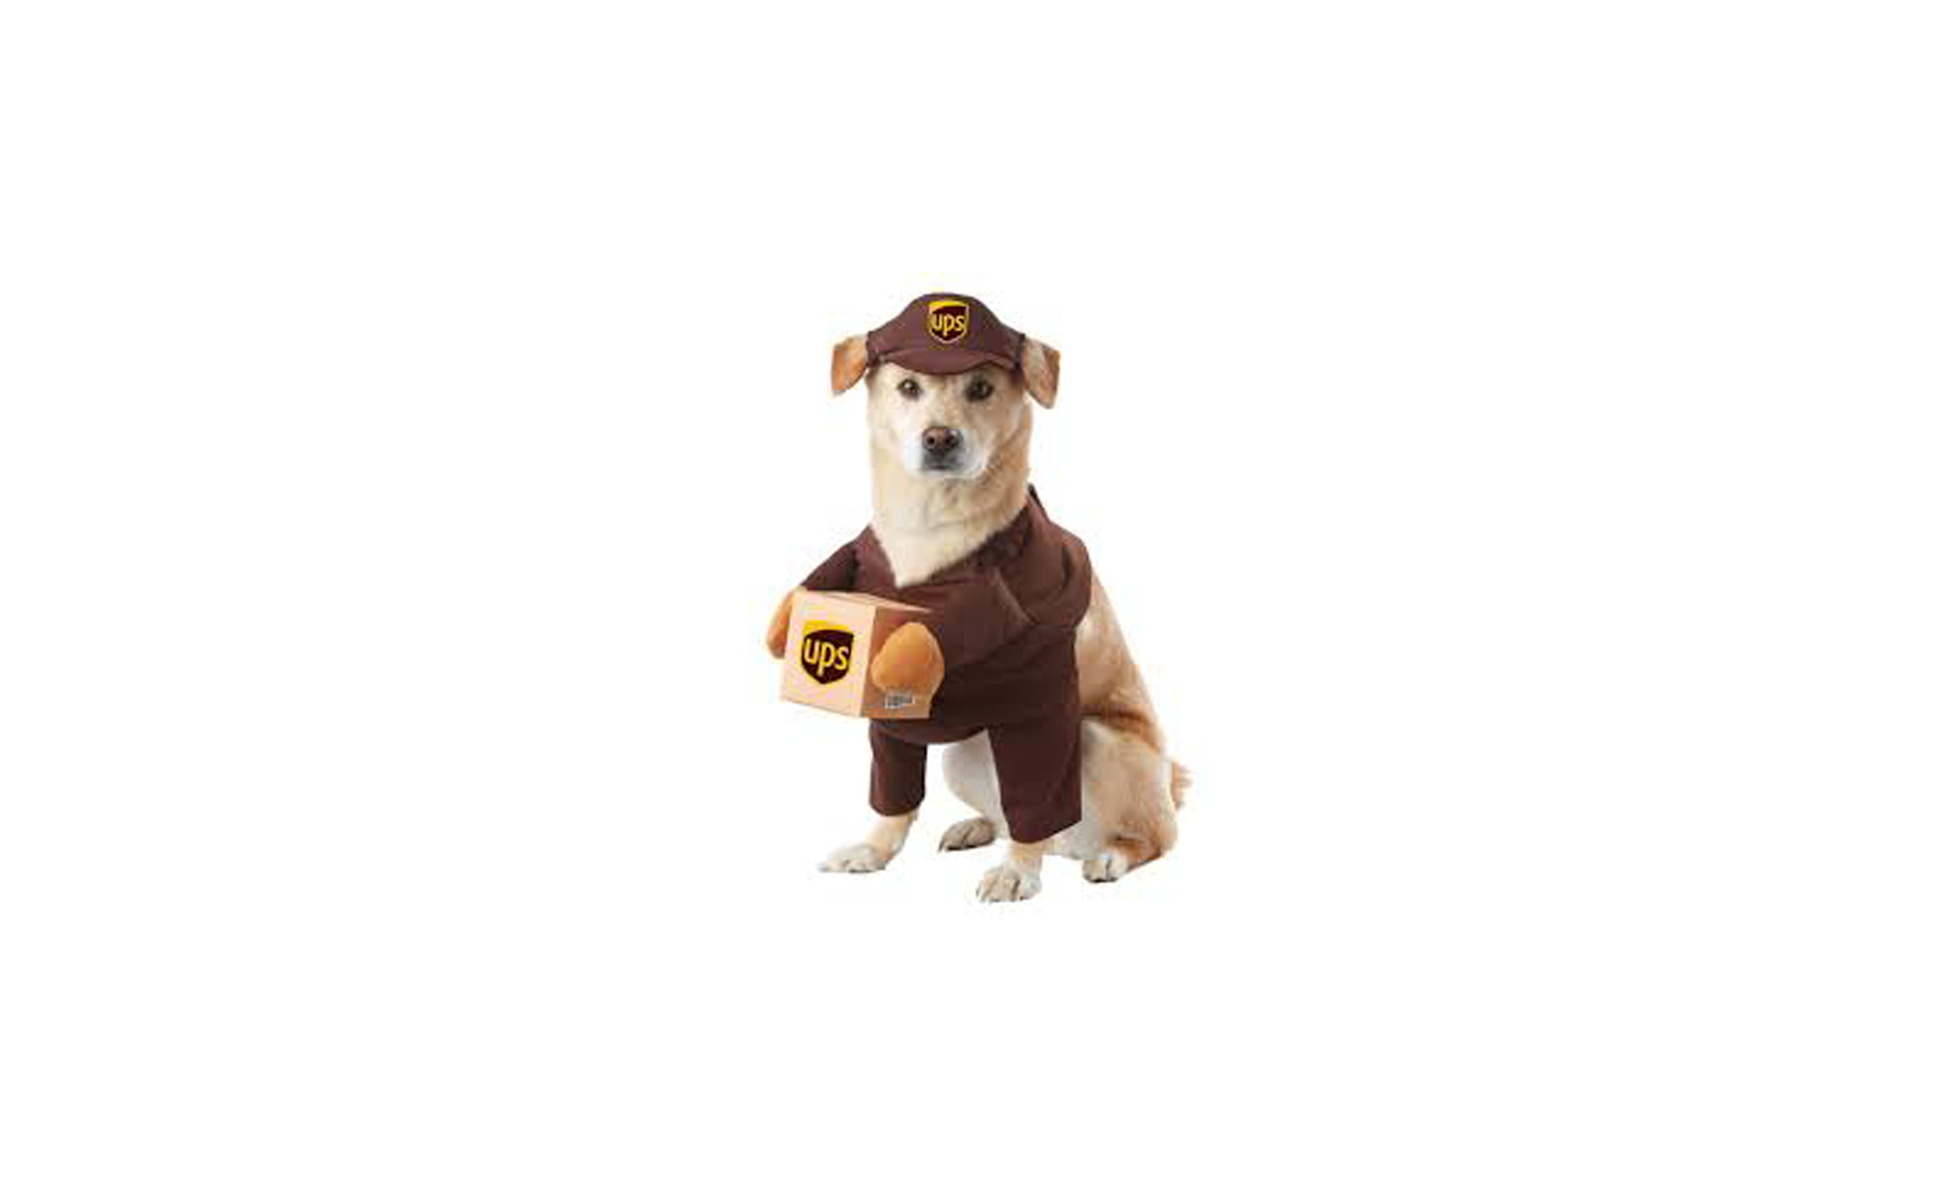   UPS Dog Costume on Amazon  